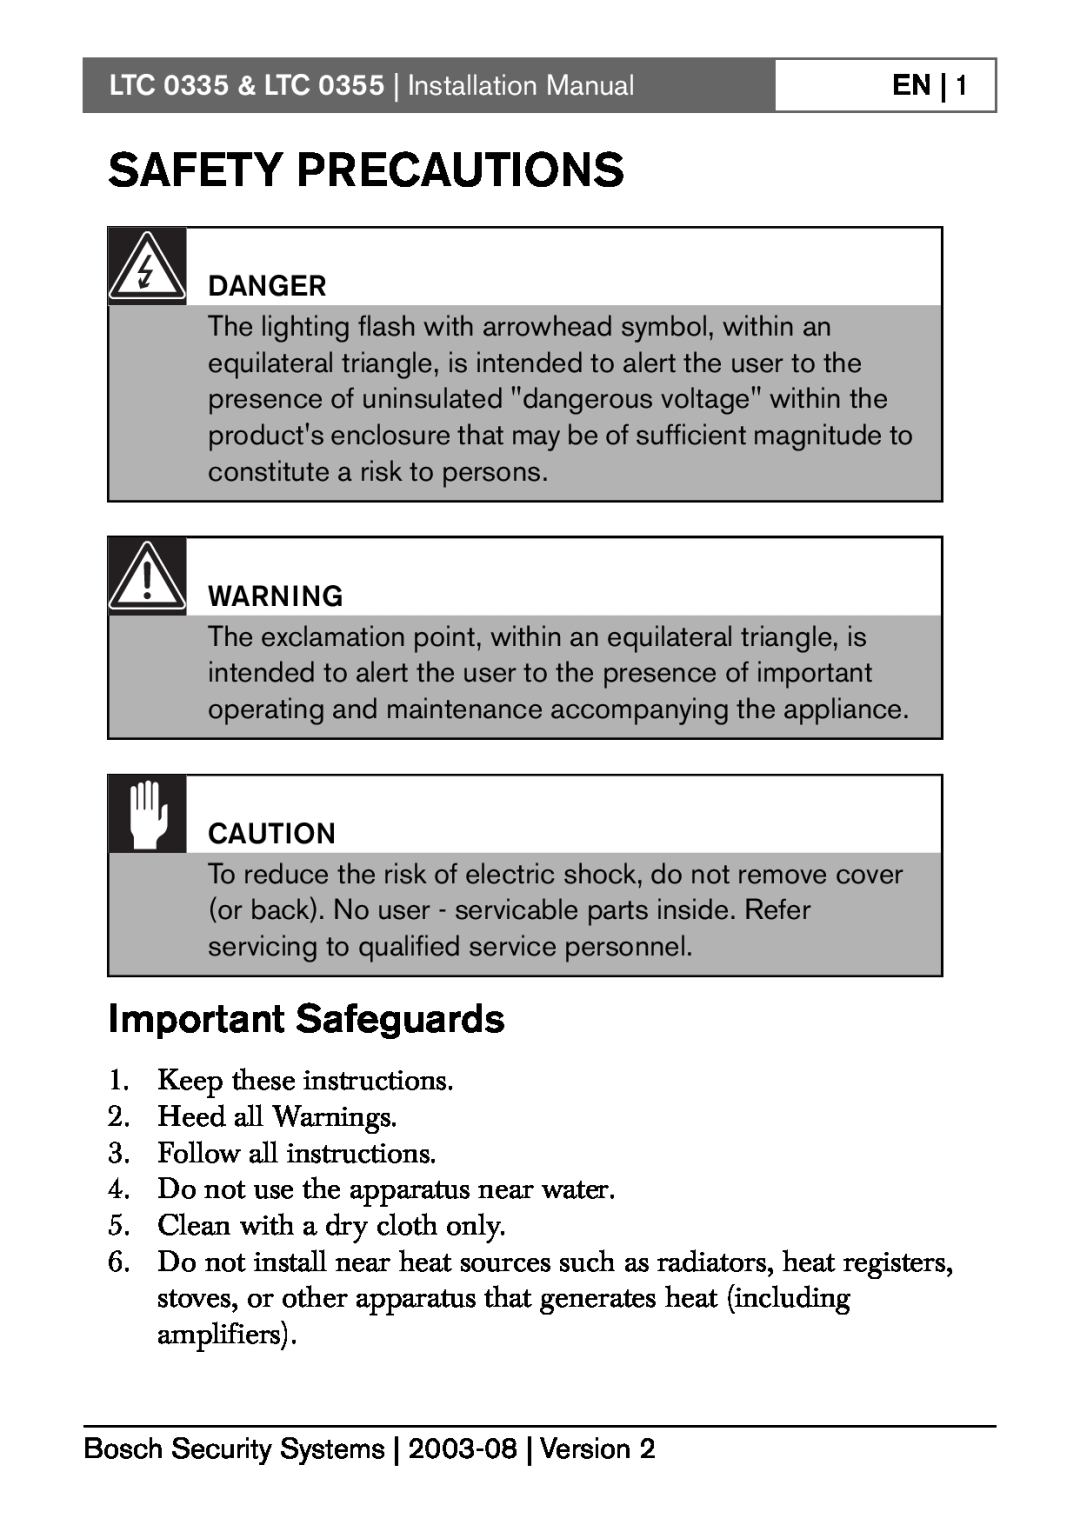 Bosch Appliances installation manual Safety Precautions, Important Safeguards, LTC 0335 & LTC 0355 Installation Manual 